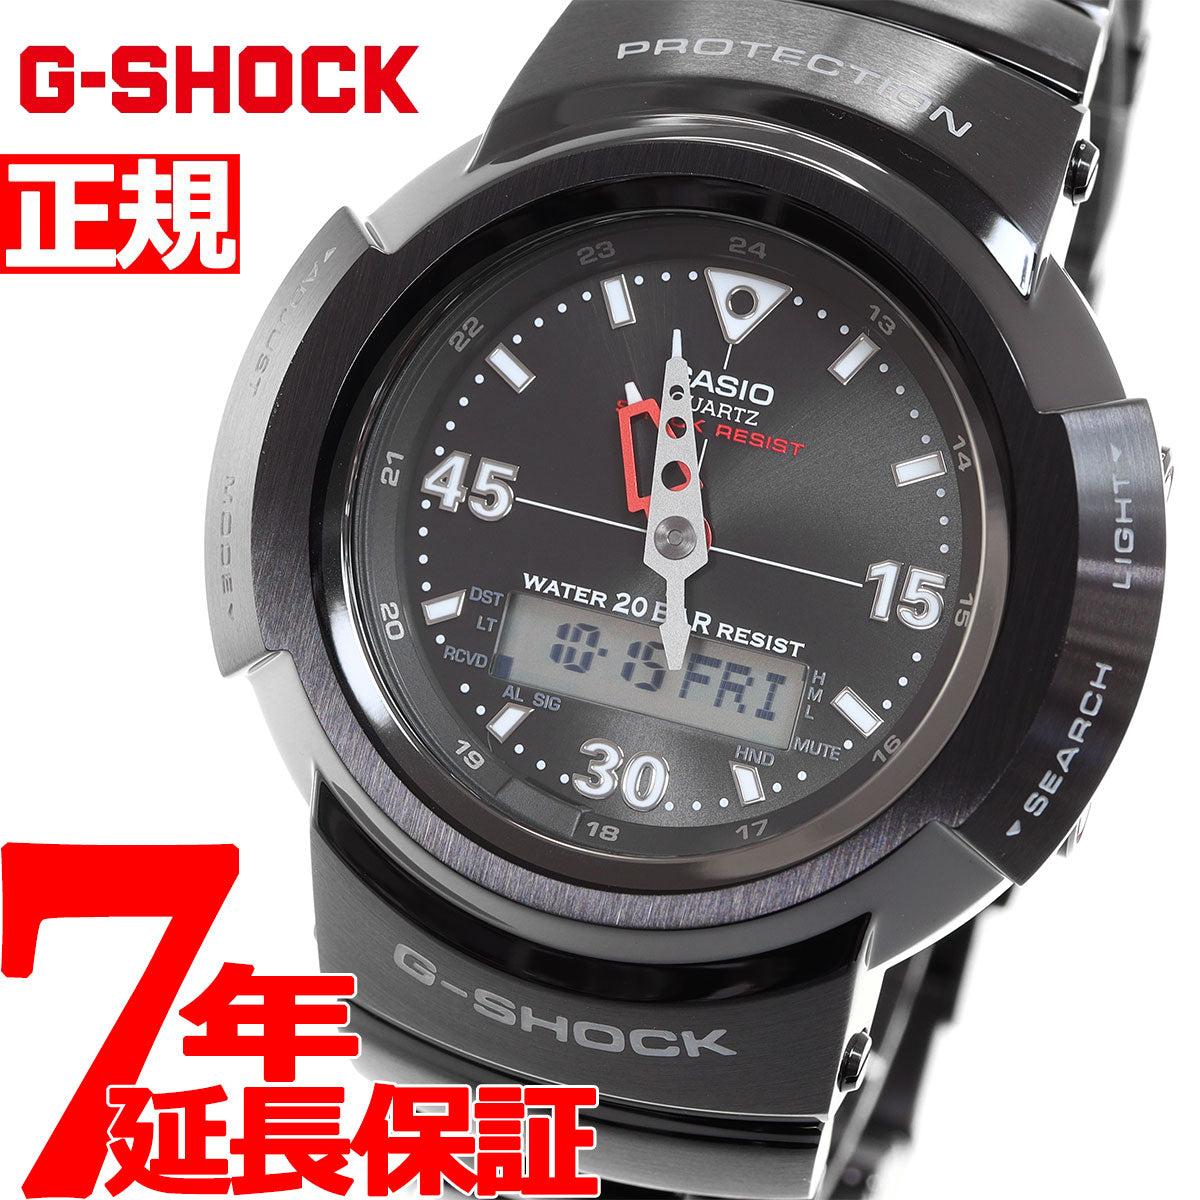 G-SHOCK 電波 ソーラー 電波時計 カシオ Gショック 腕時計 メンズ